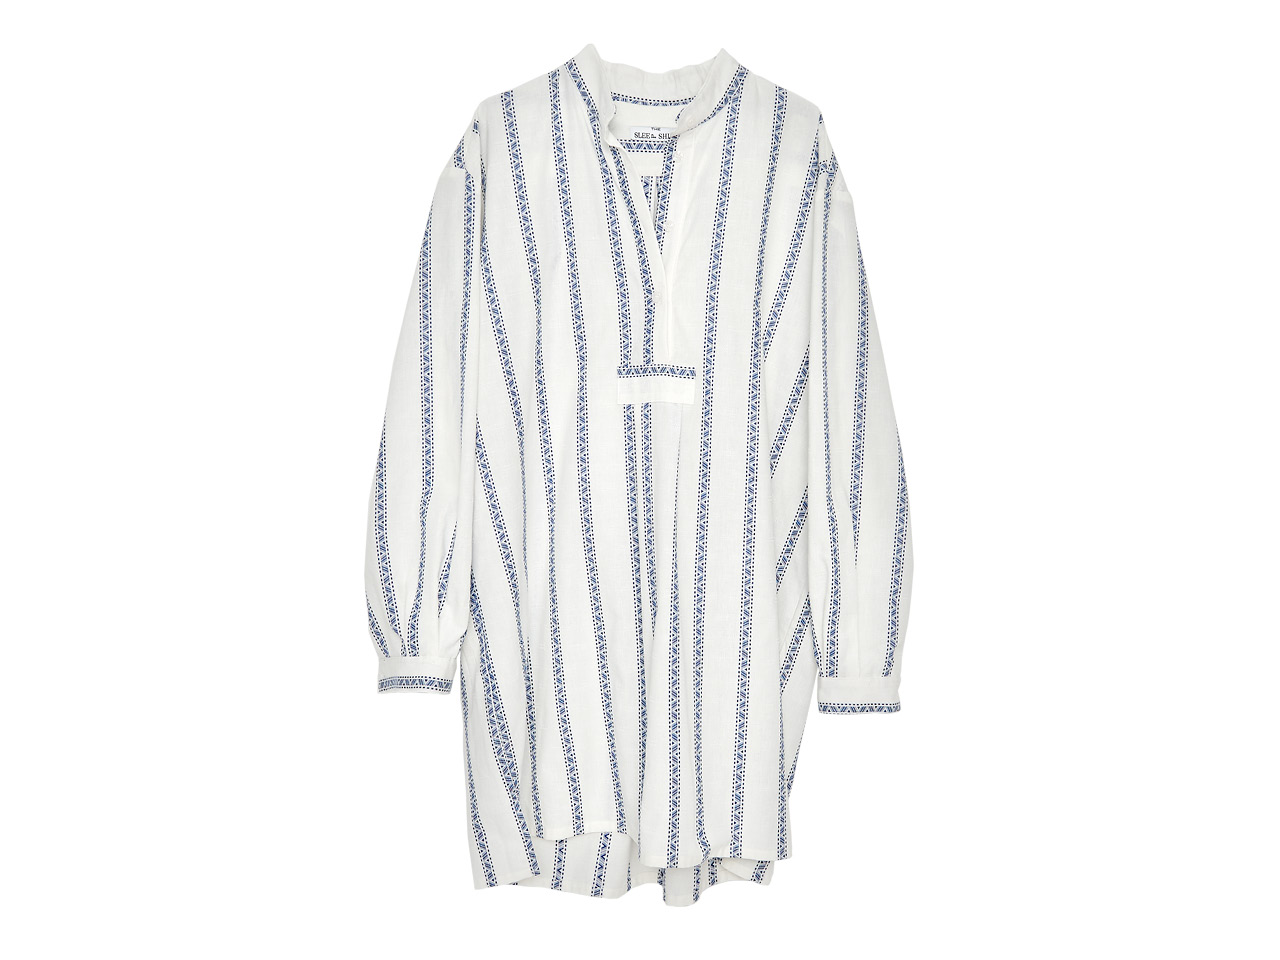 White sleep shirt with blue vertical stripes.